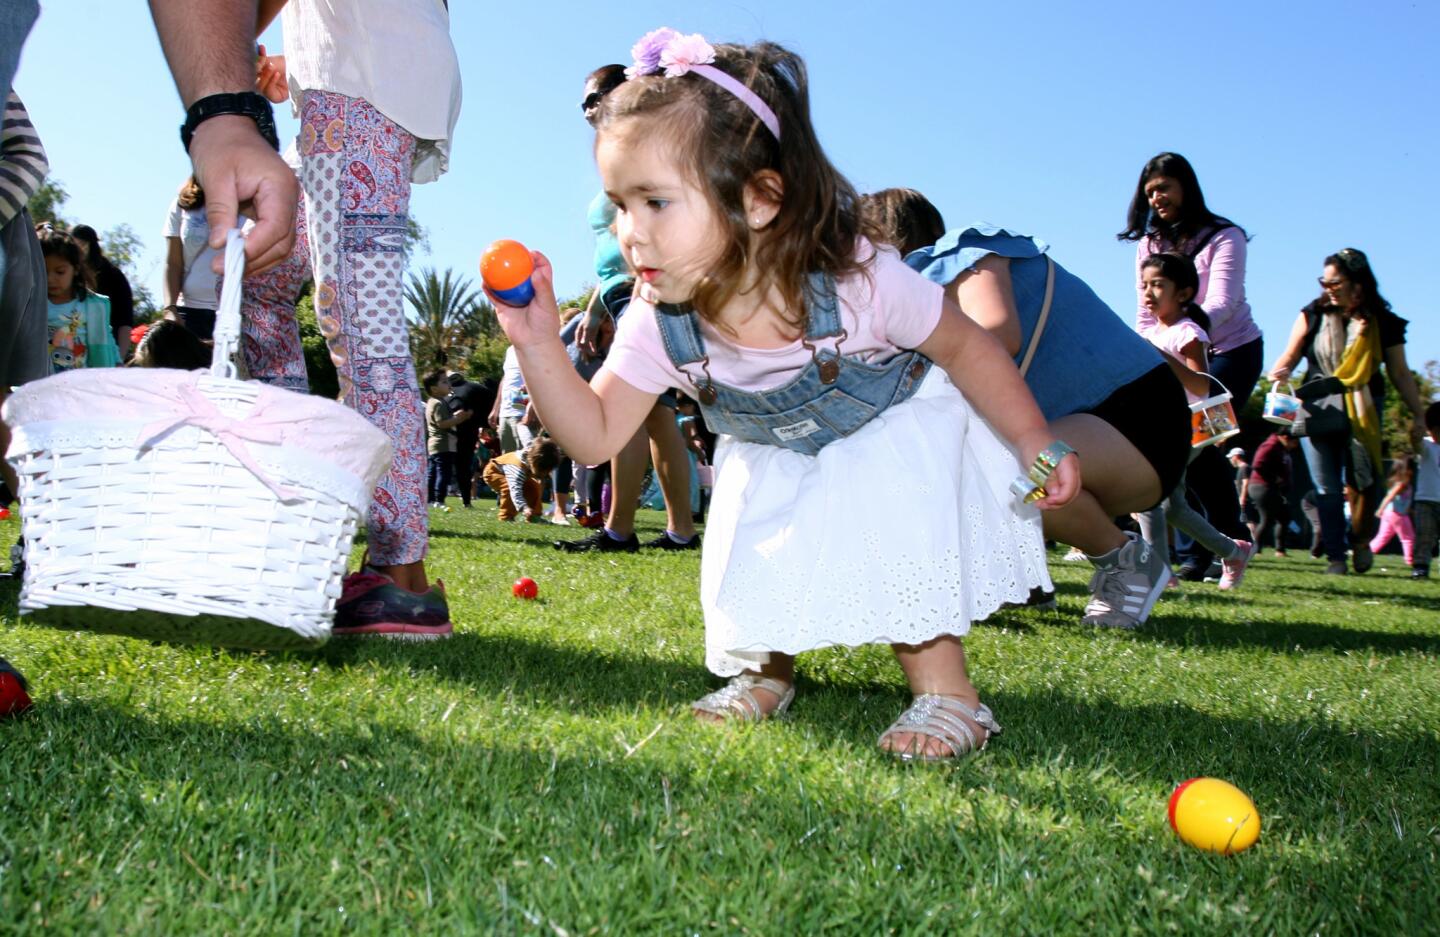 Photo Gallery: The annual Burbank Spring Egg-Stravaganza at McCambridge Park